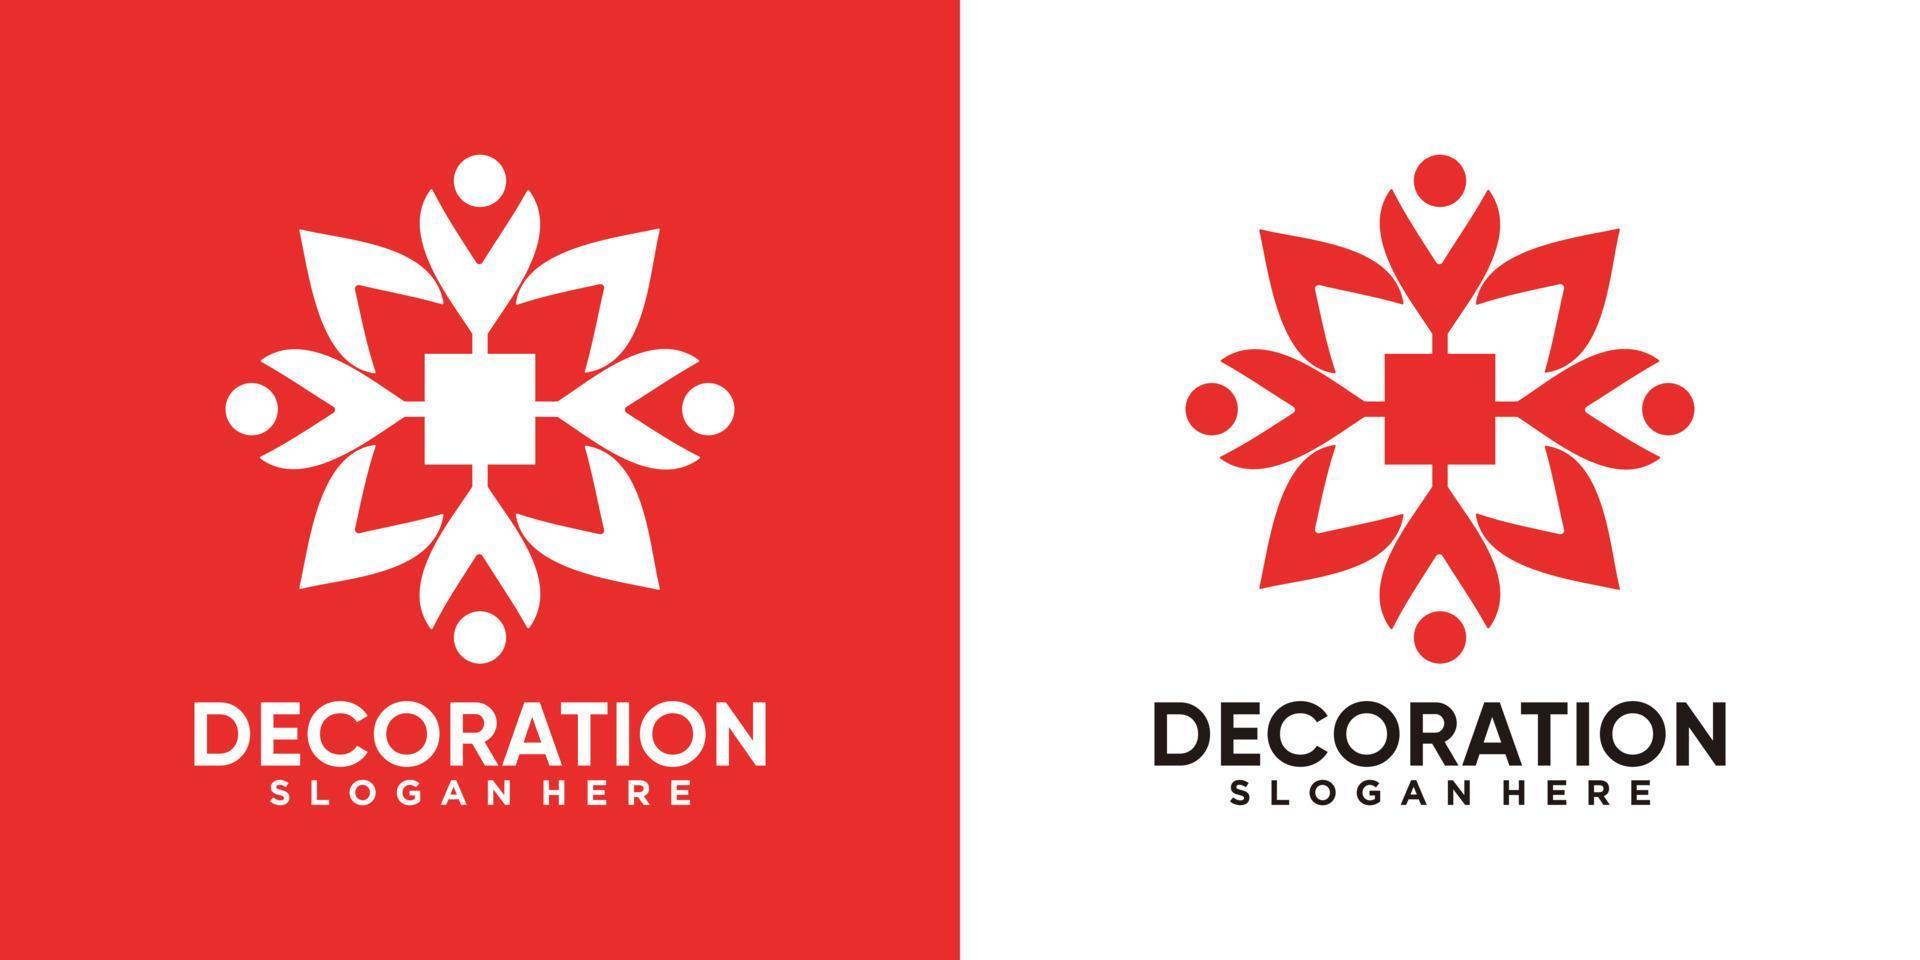 decoration logo design with creativ concept vector